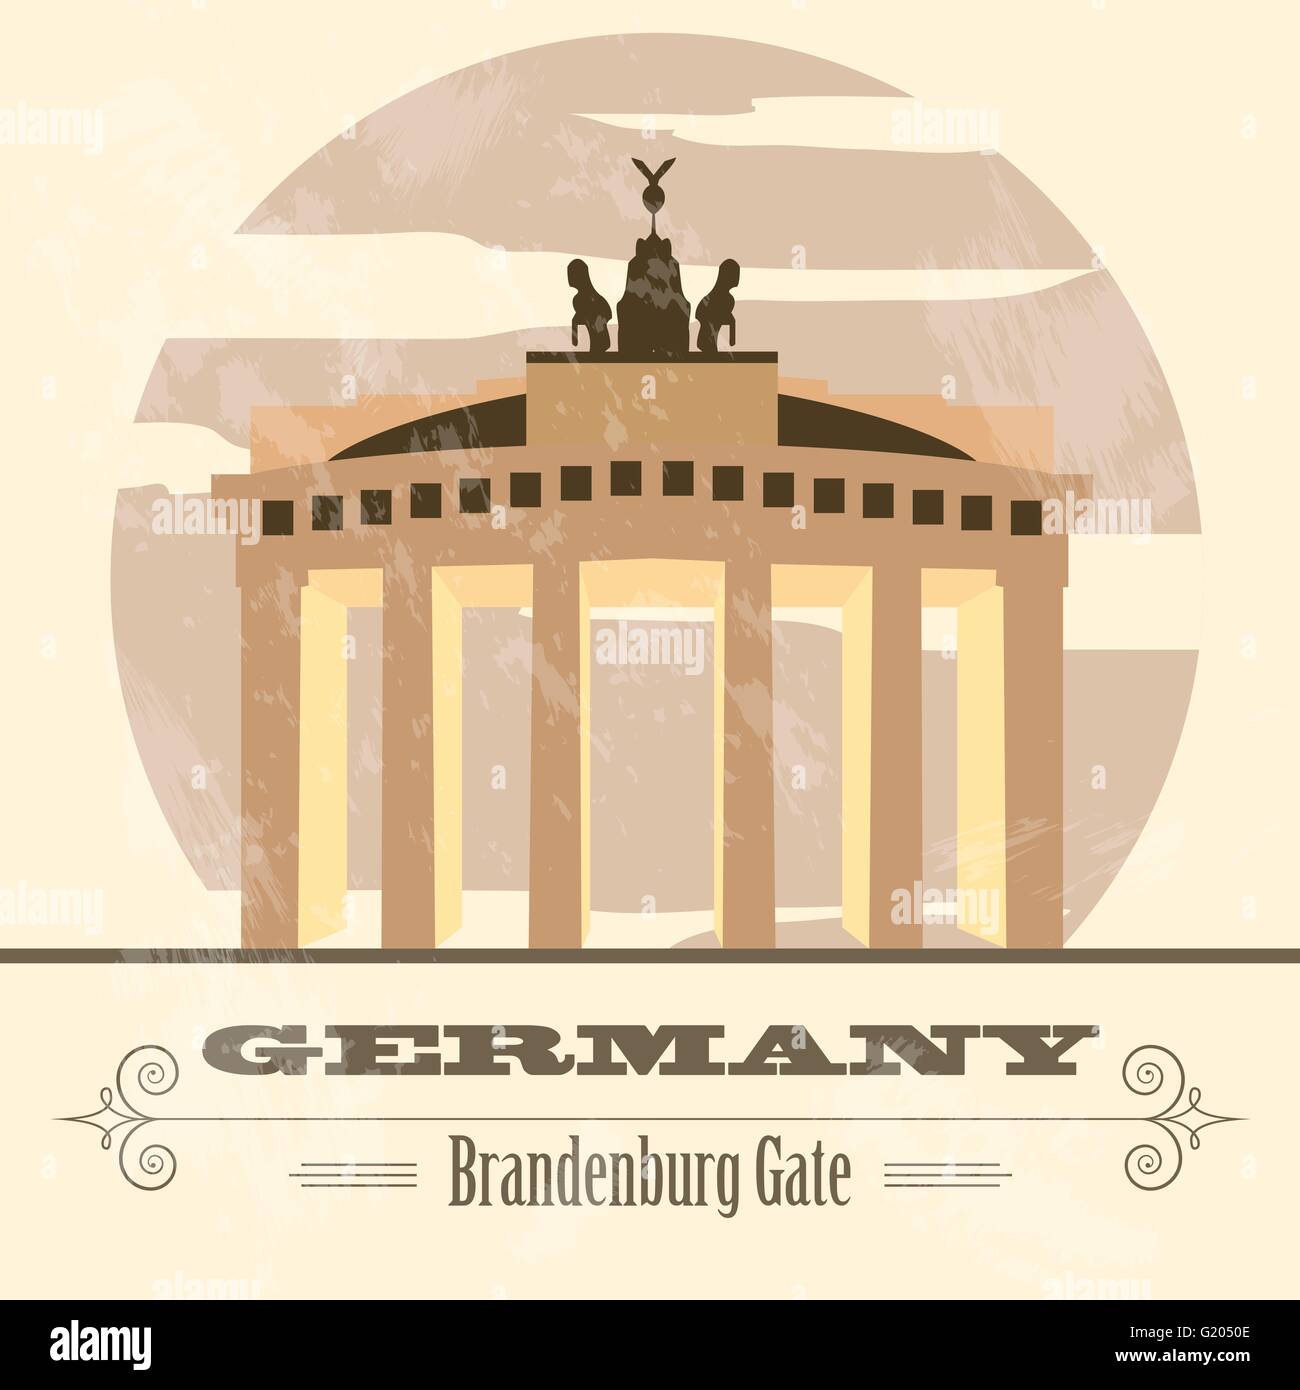 Germany landmarks. Retro styled image. Vector illustration Stock Vector